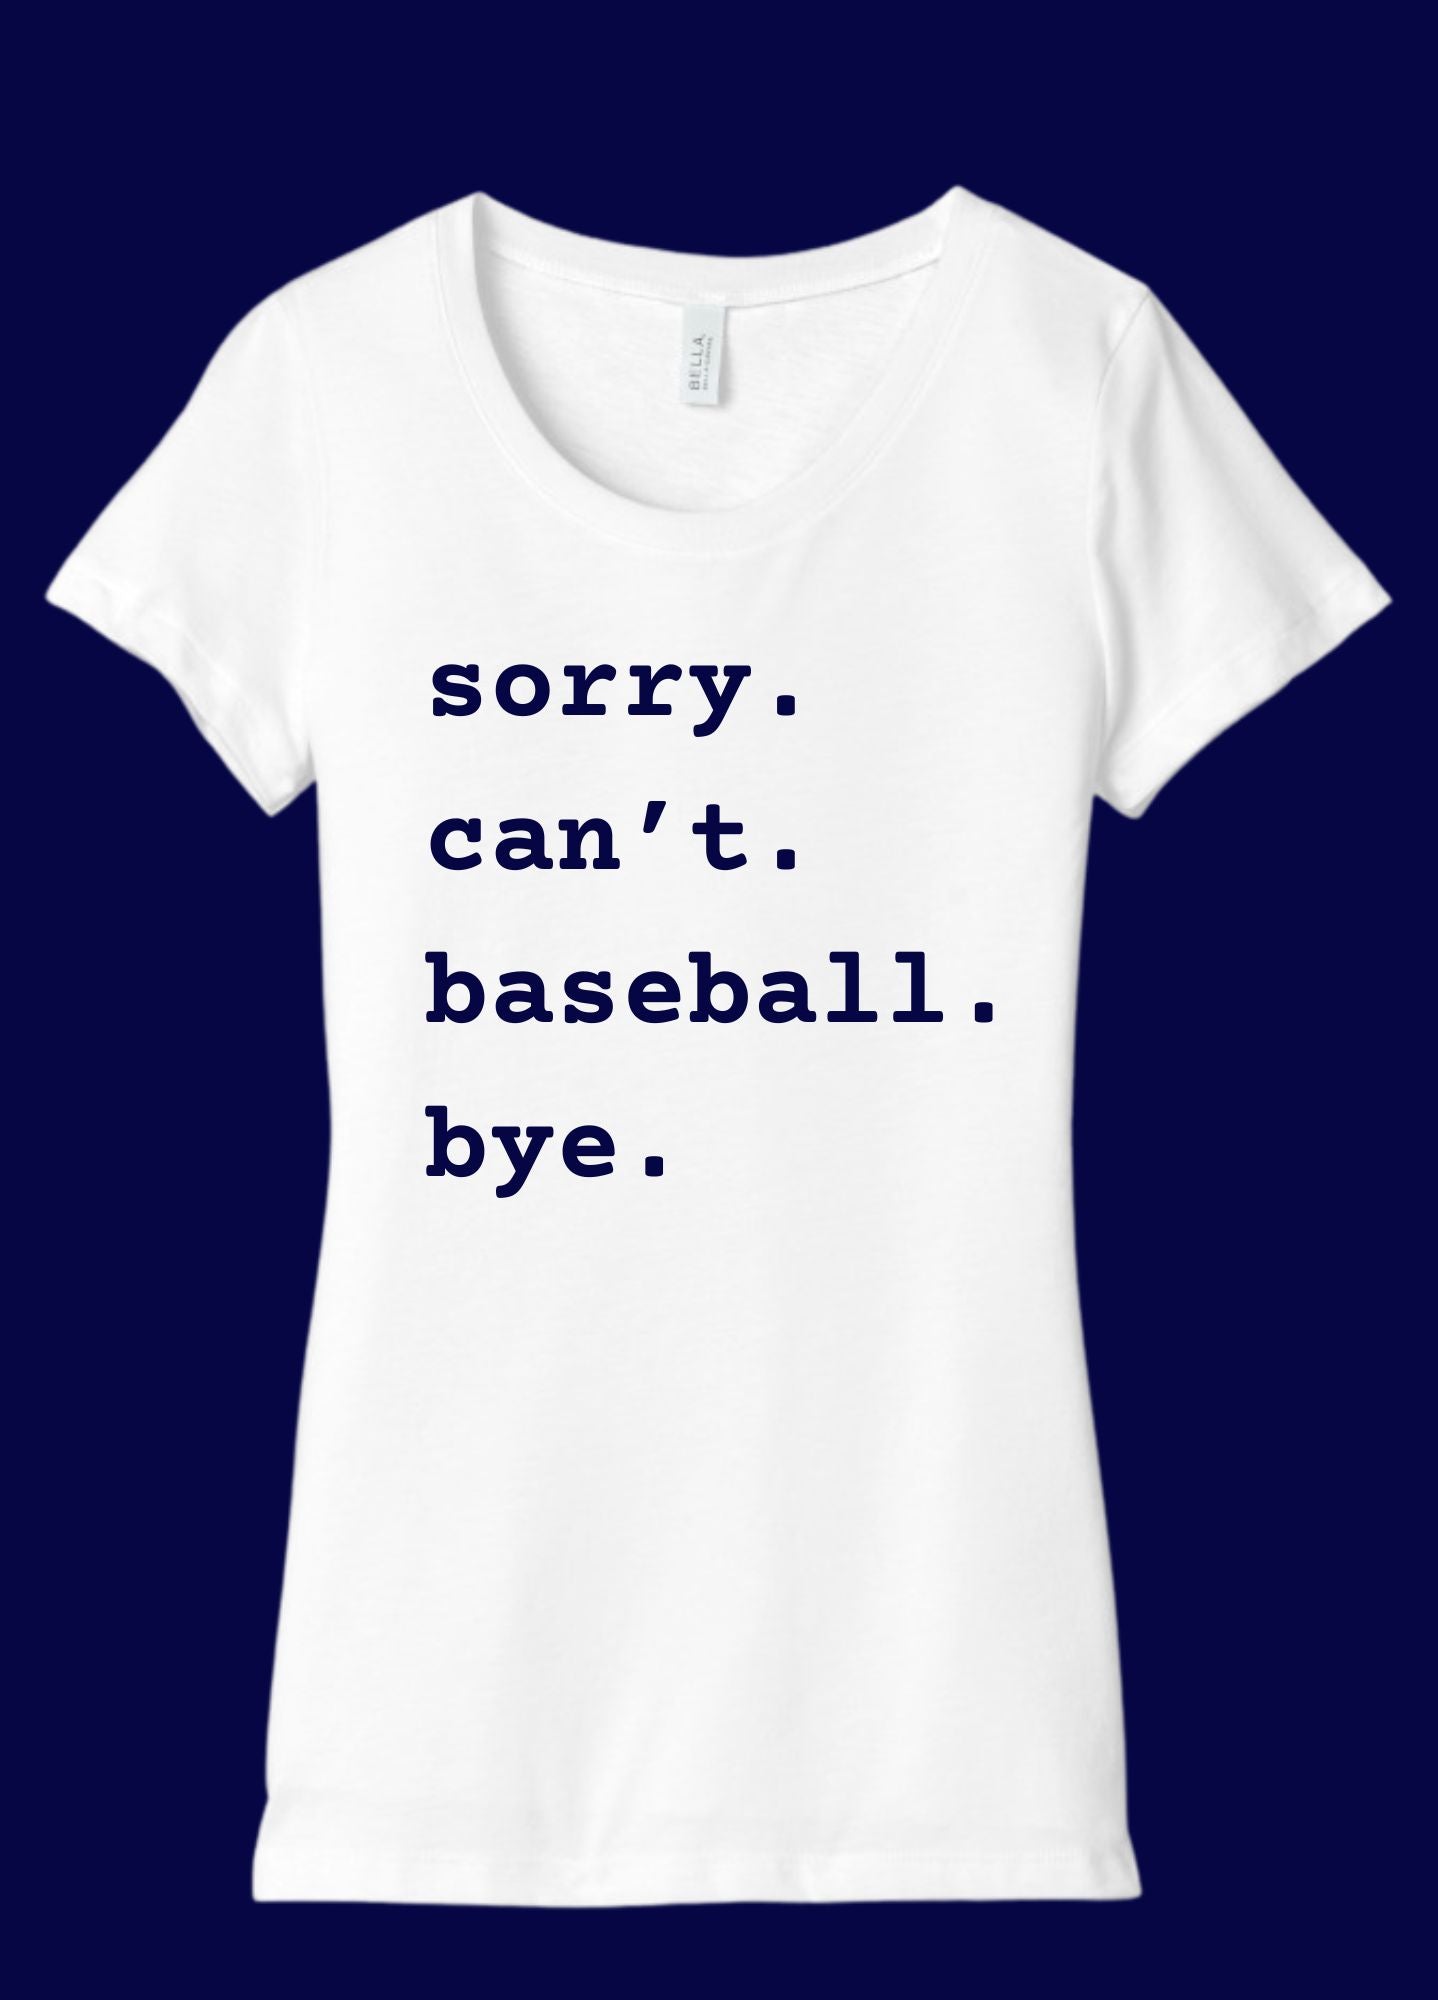 Women's Short Sleeve Tee - Sorry. Cant. Baseball. Bye.